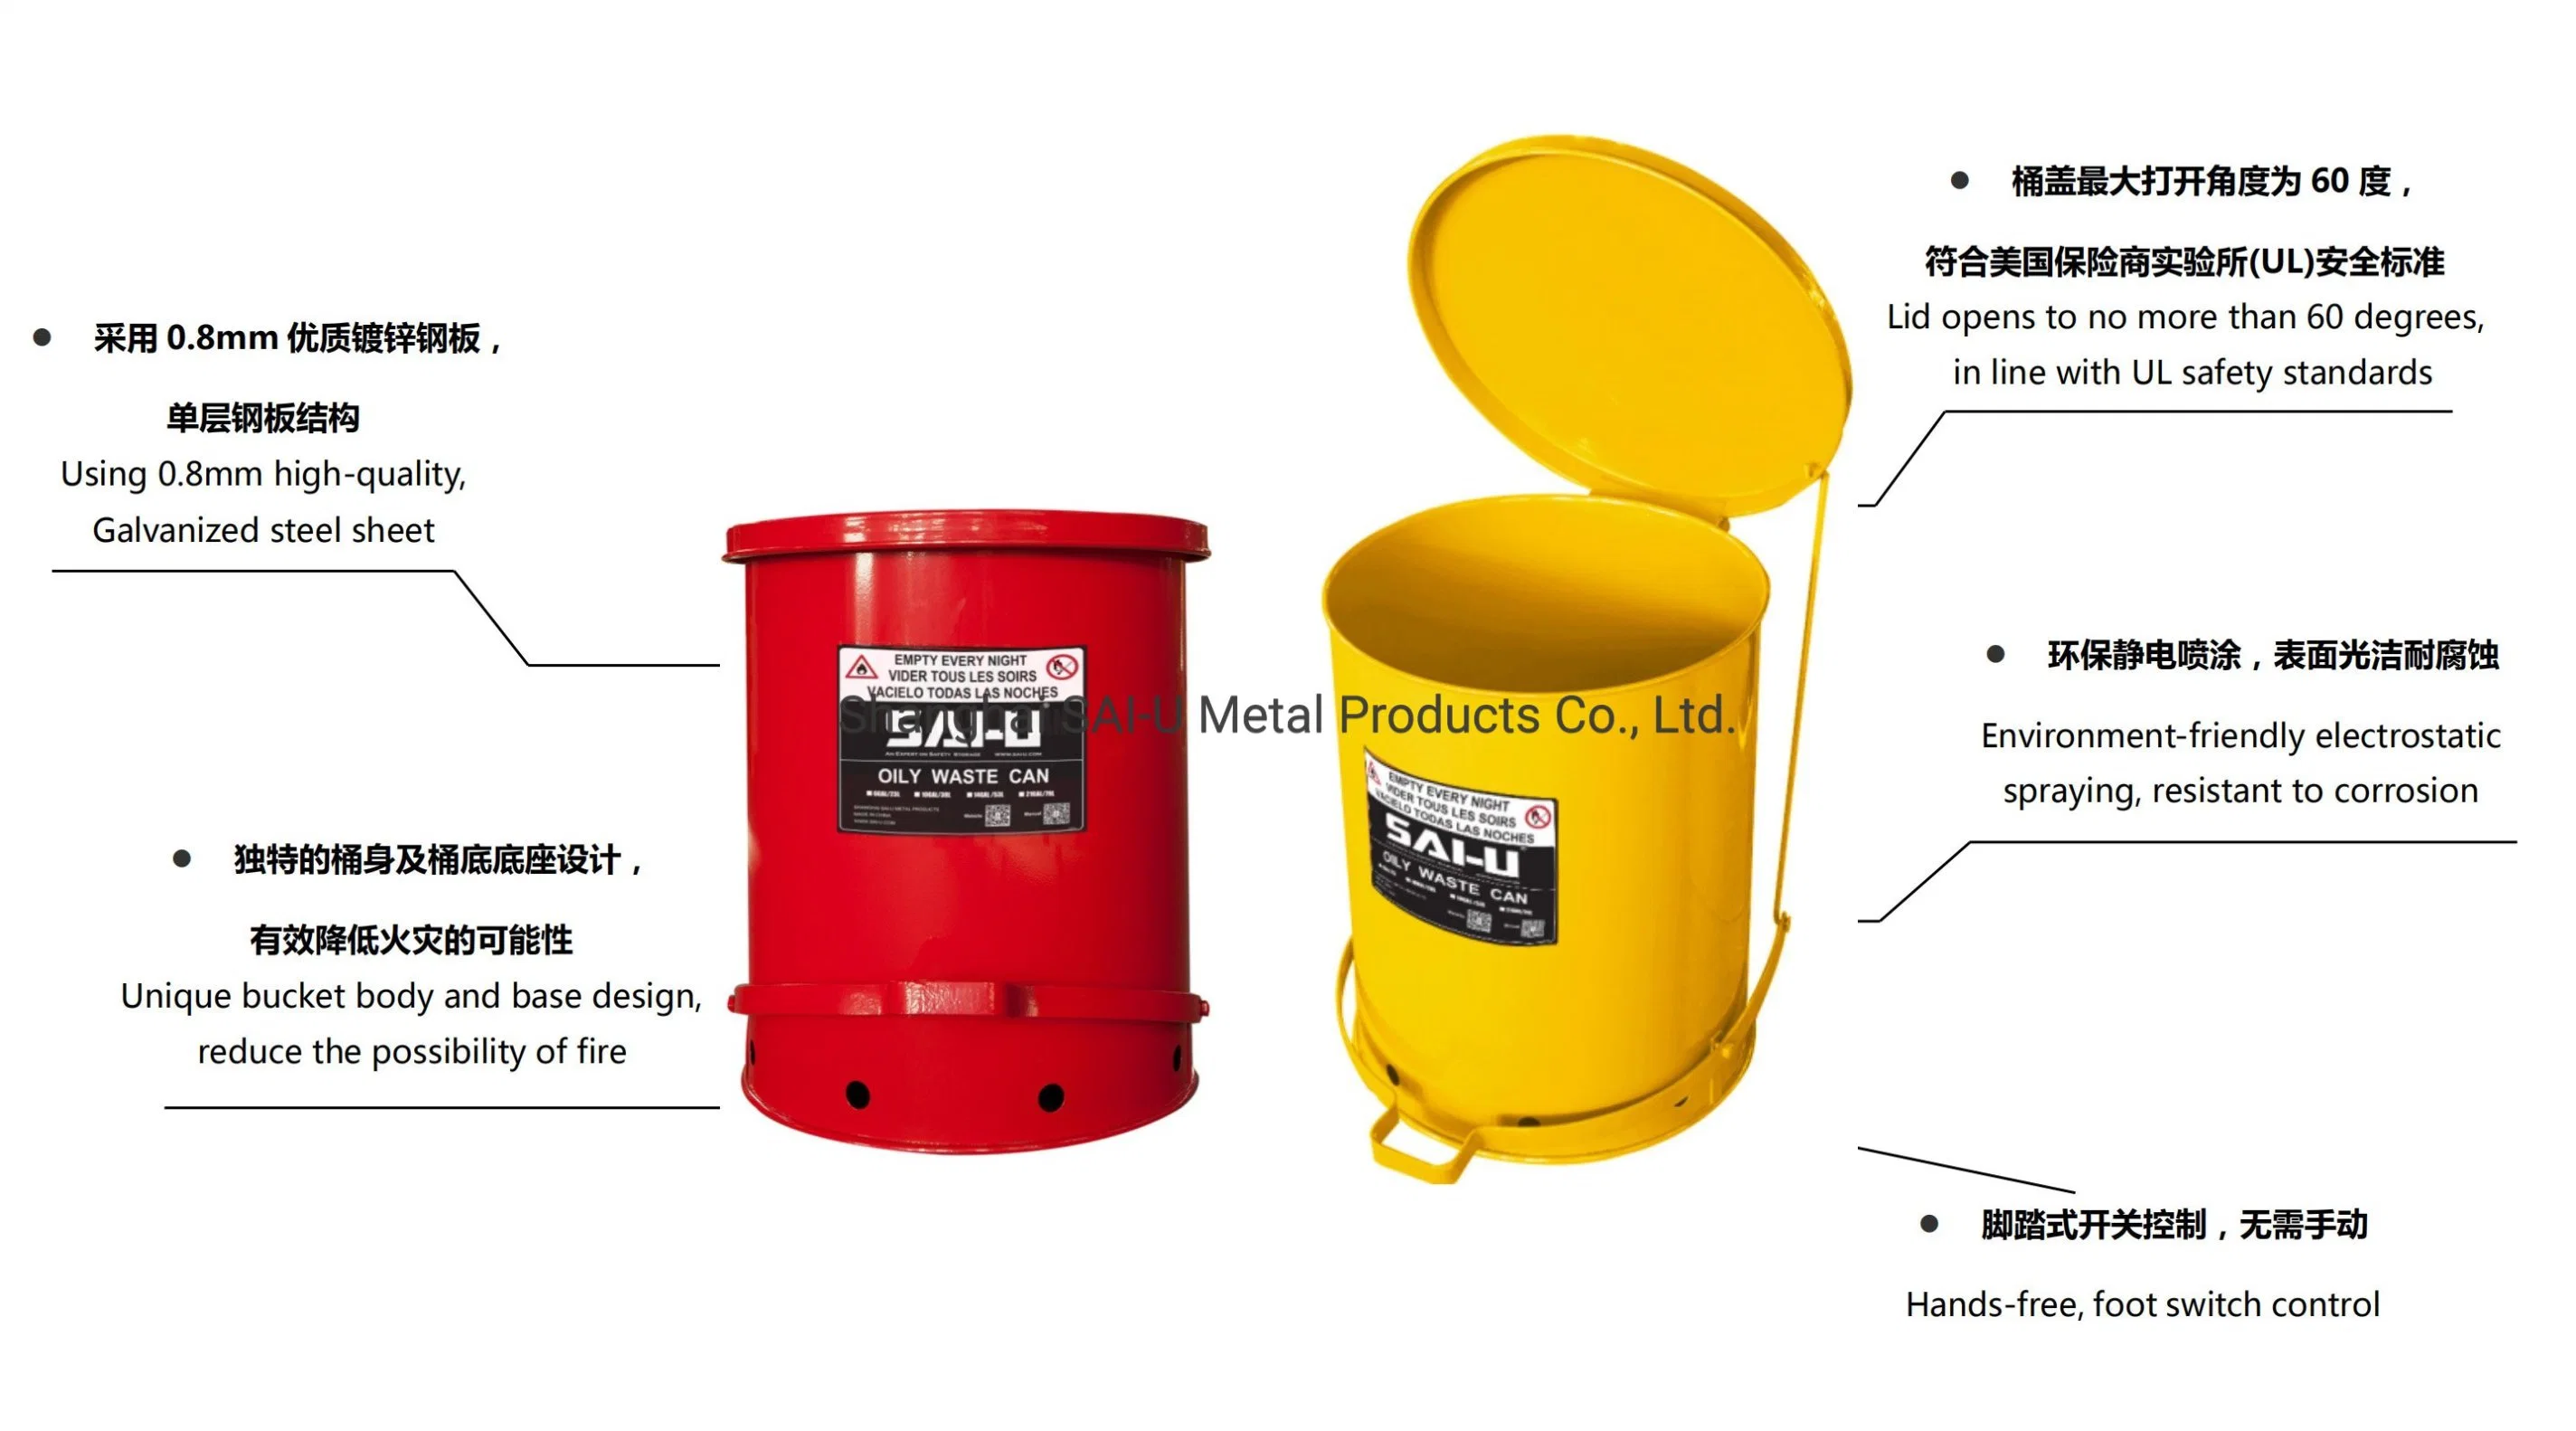 Sai-U Fireproof Galvanized Steel Waste Bin School Laboratory Equipment Supplies University Furniture 21 Gal / 79.4L